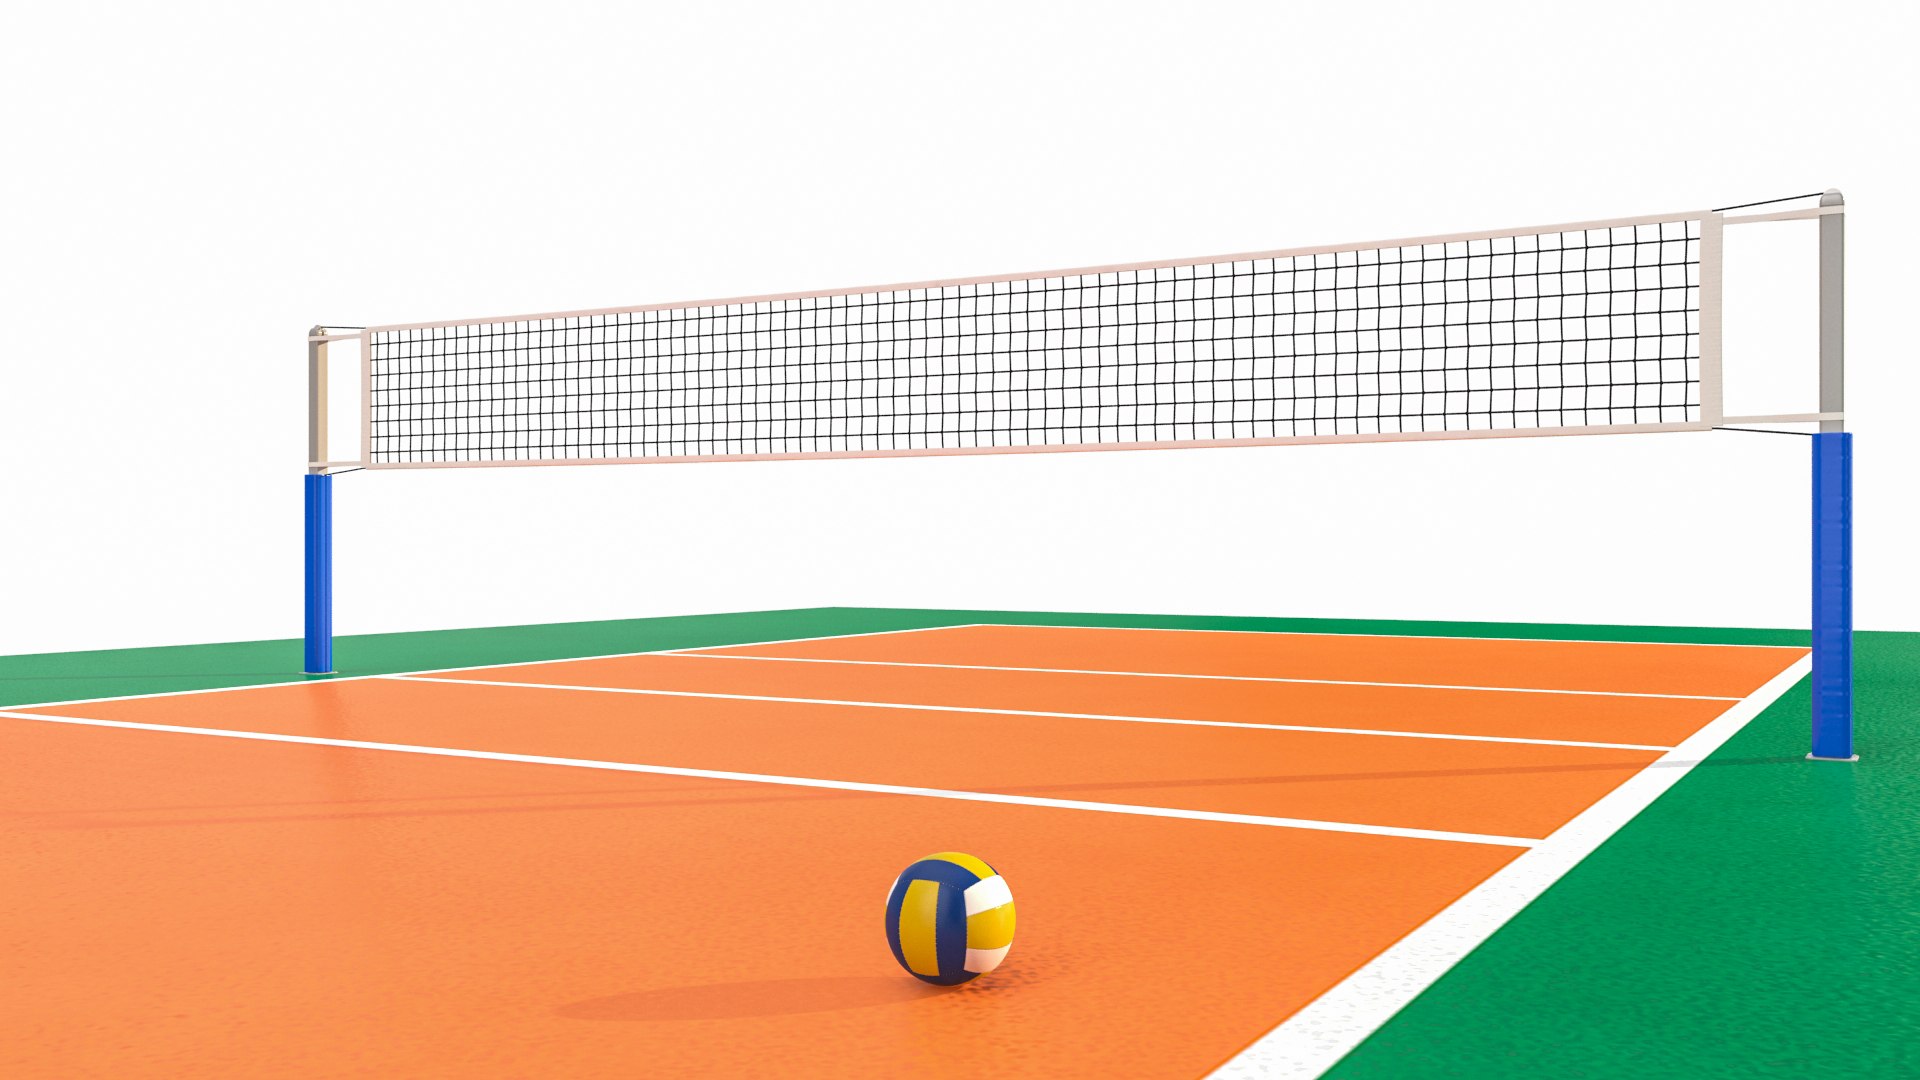 3D Volleyball Court 06 model - TurboSquid 2054706